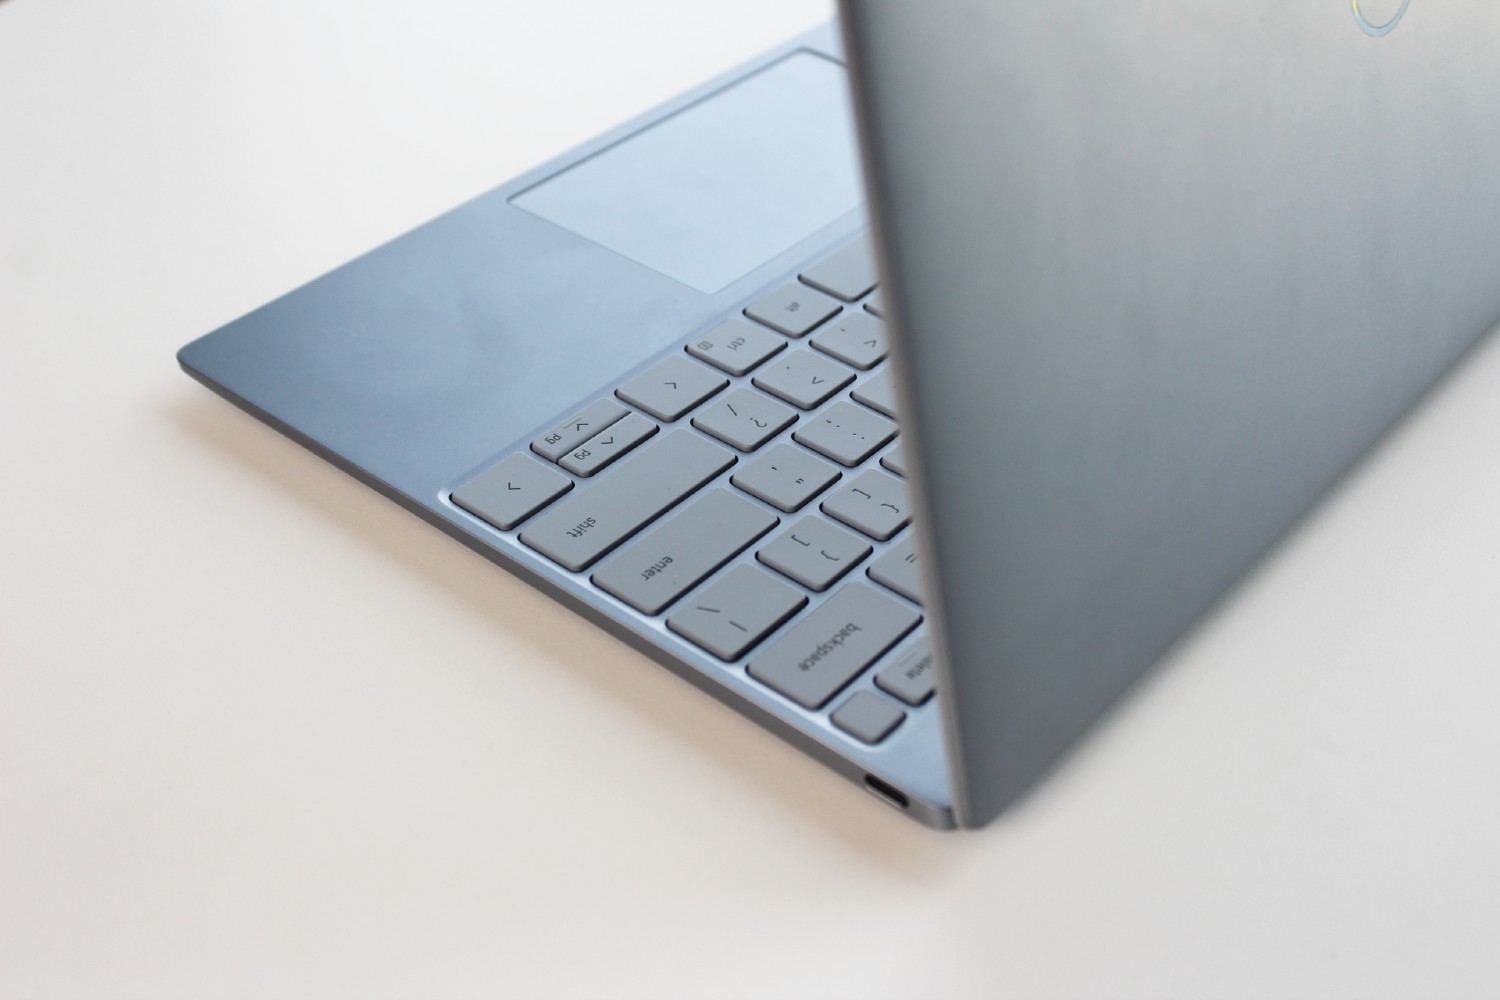 Lenovo ThinkPad Series E, L & T - Good Laptops for Students?